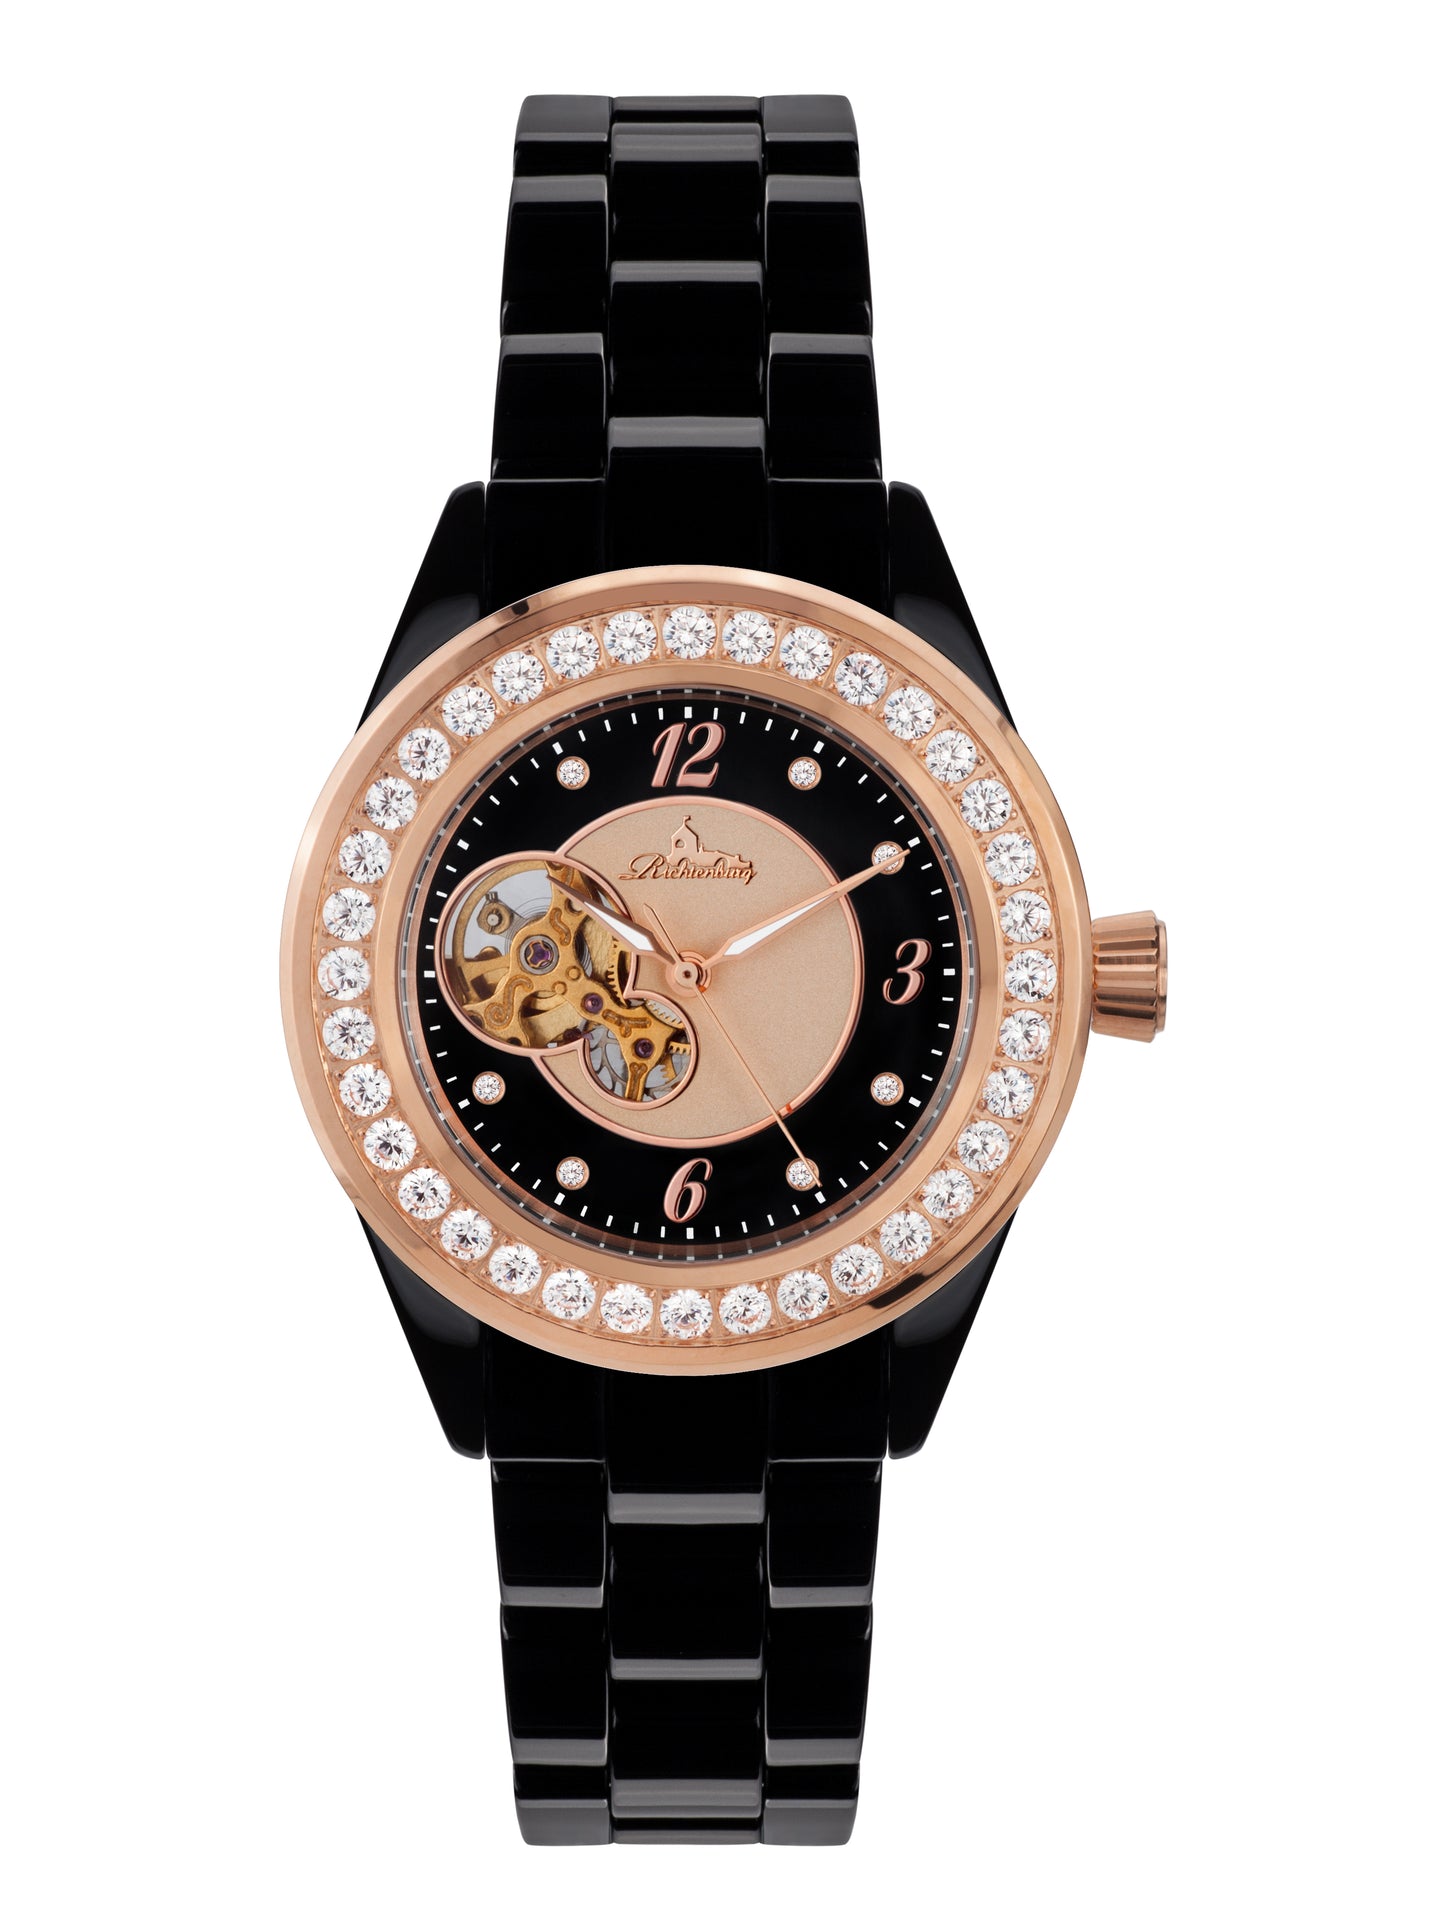 Automatic watches — Venedig Kera — Richtenburg — gold IP black